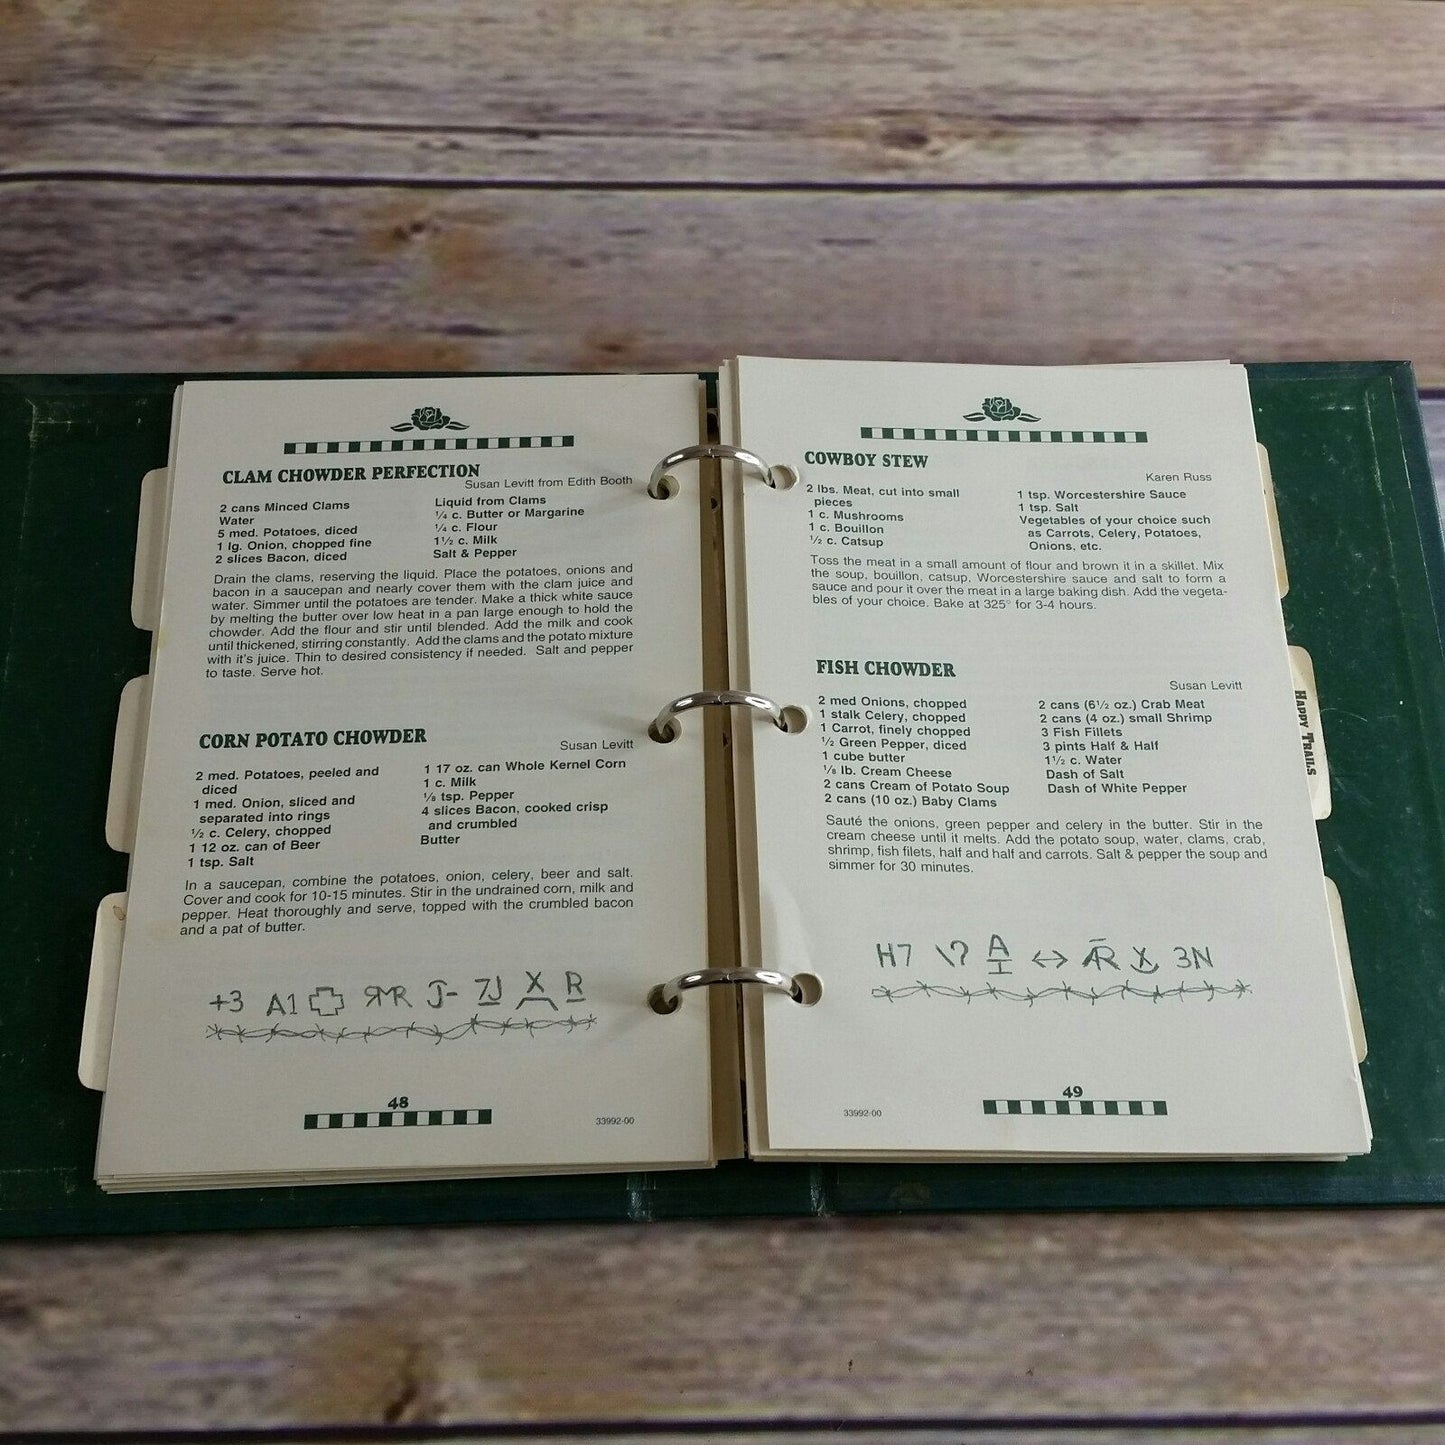 Vintage California Cookbook Fortuna Humboldt County Cattlewomen A Century on the Range 3 Ring Binder